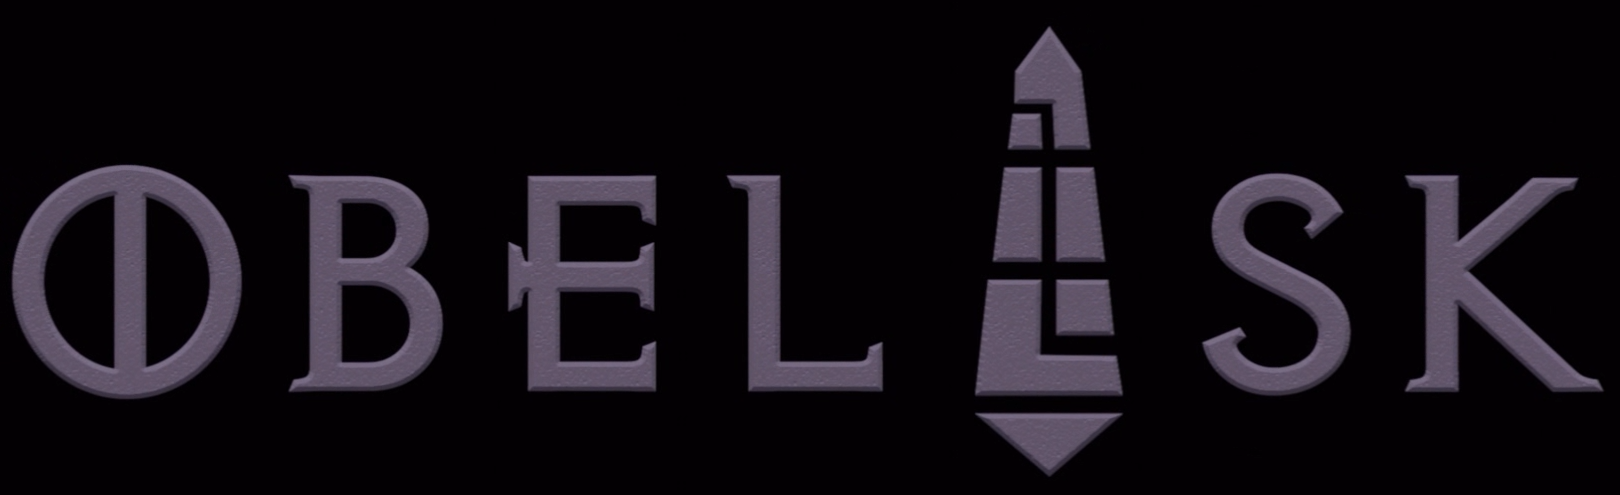 Obelisk - Daydream Interactive